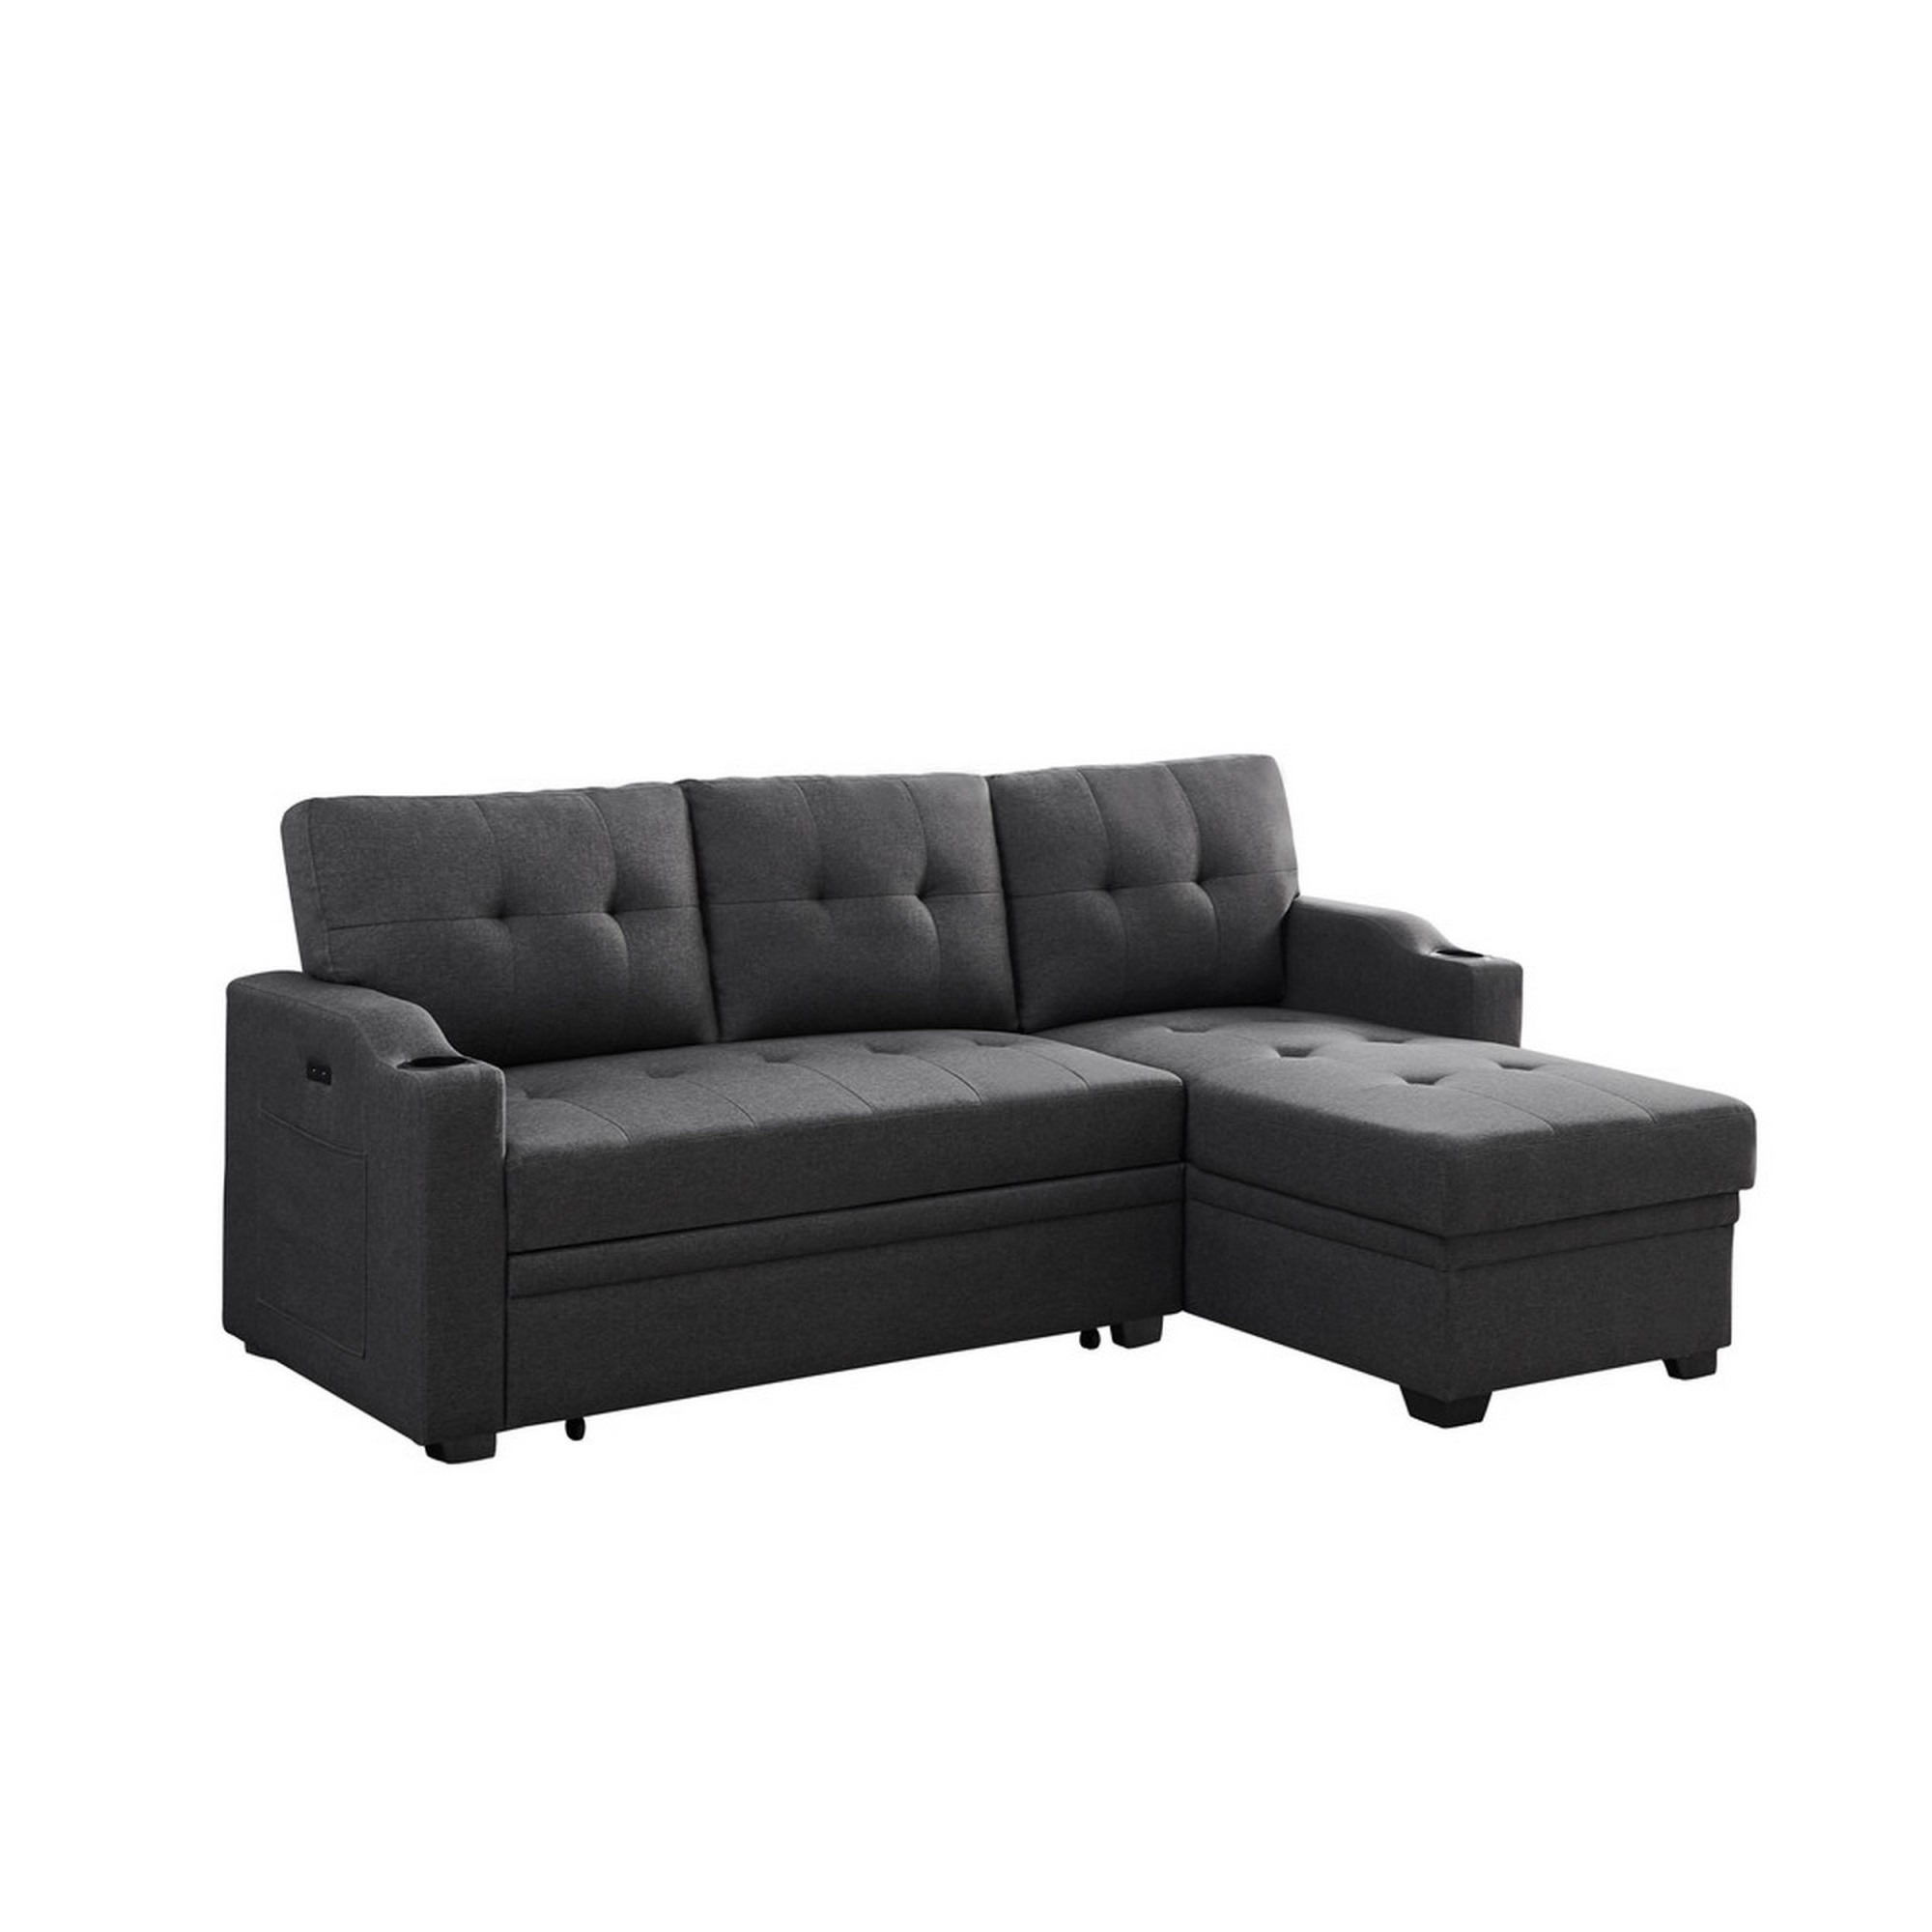 Benjara Leon 83 Inch Sleeper Sectional Sofa, USB Ports, Cupholders, Dark Gray Linen